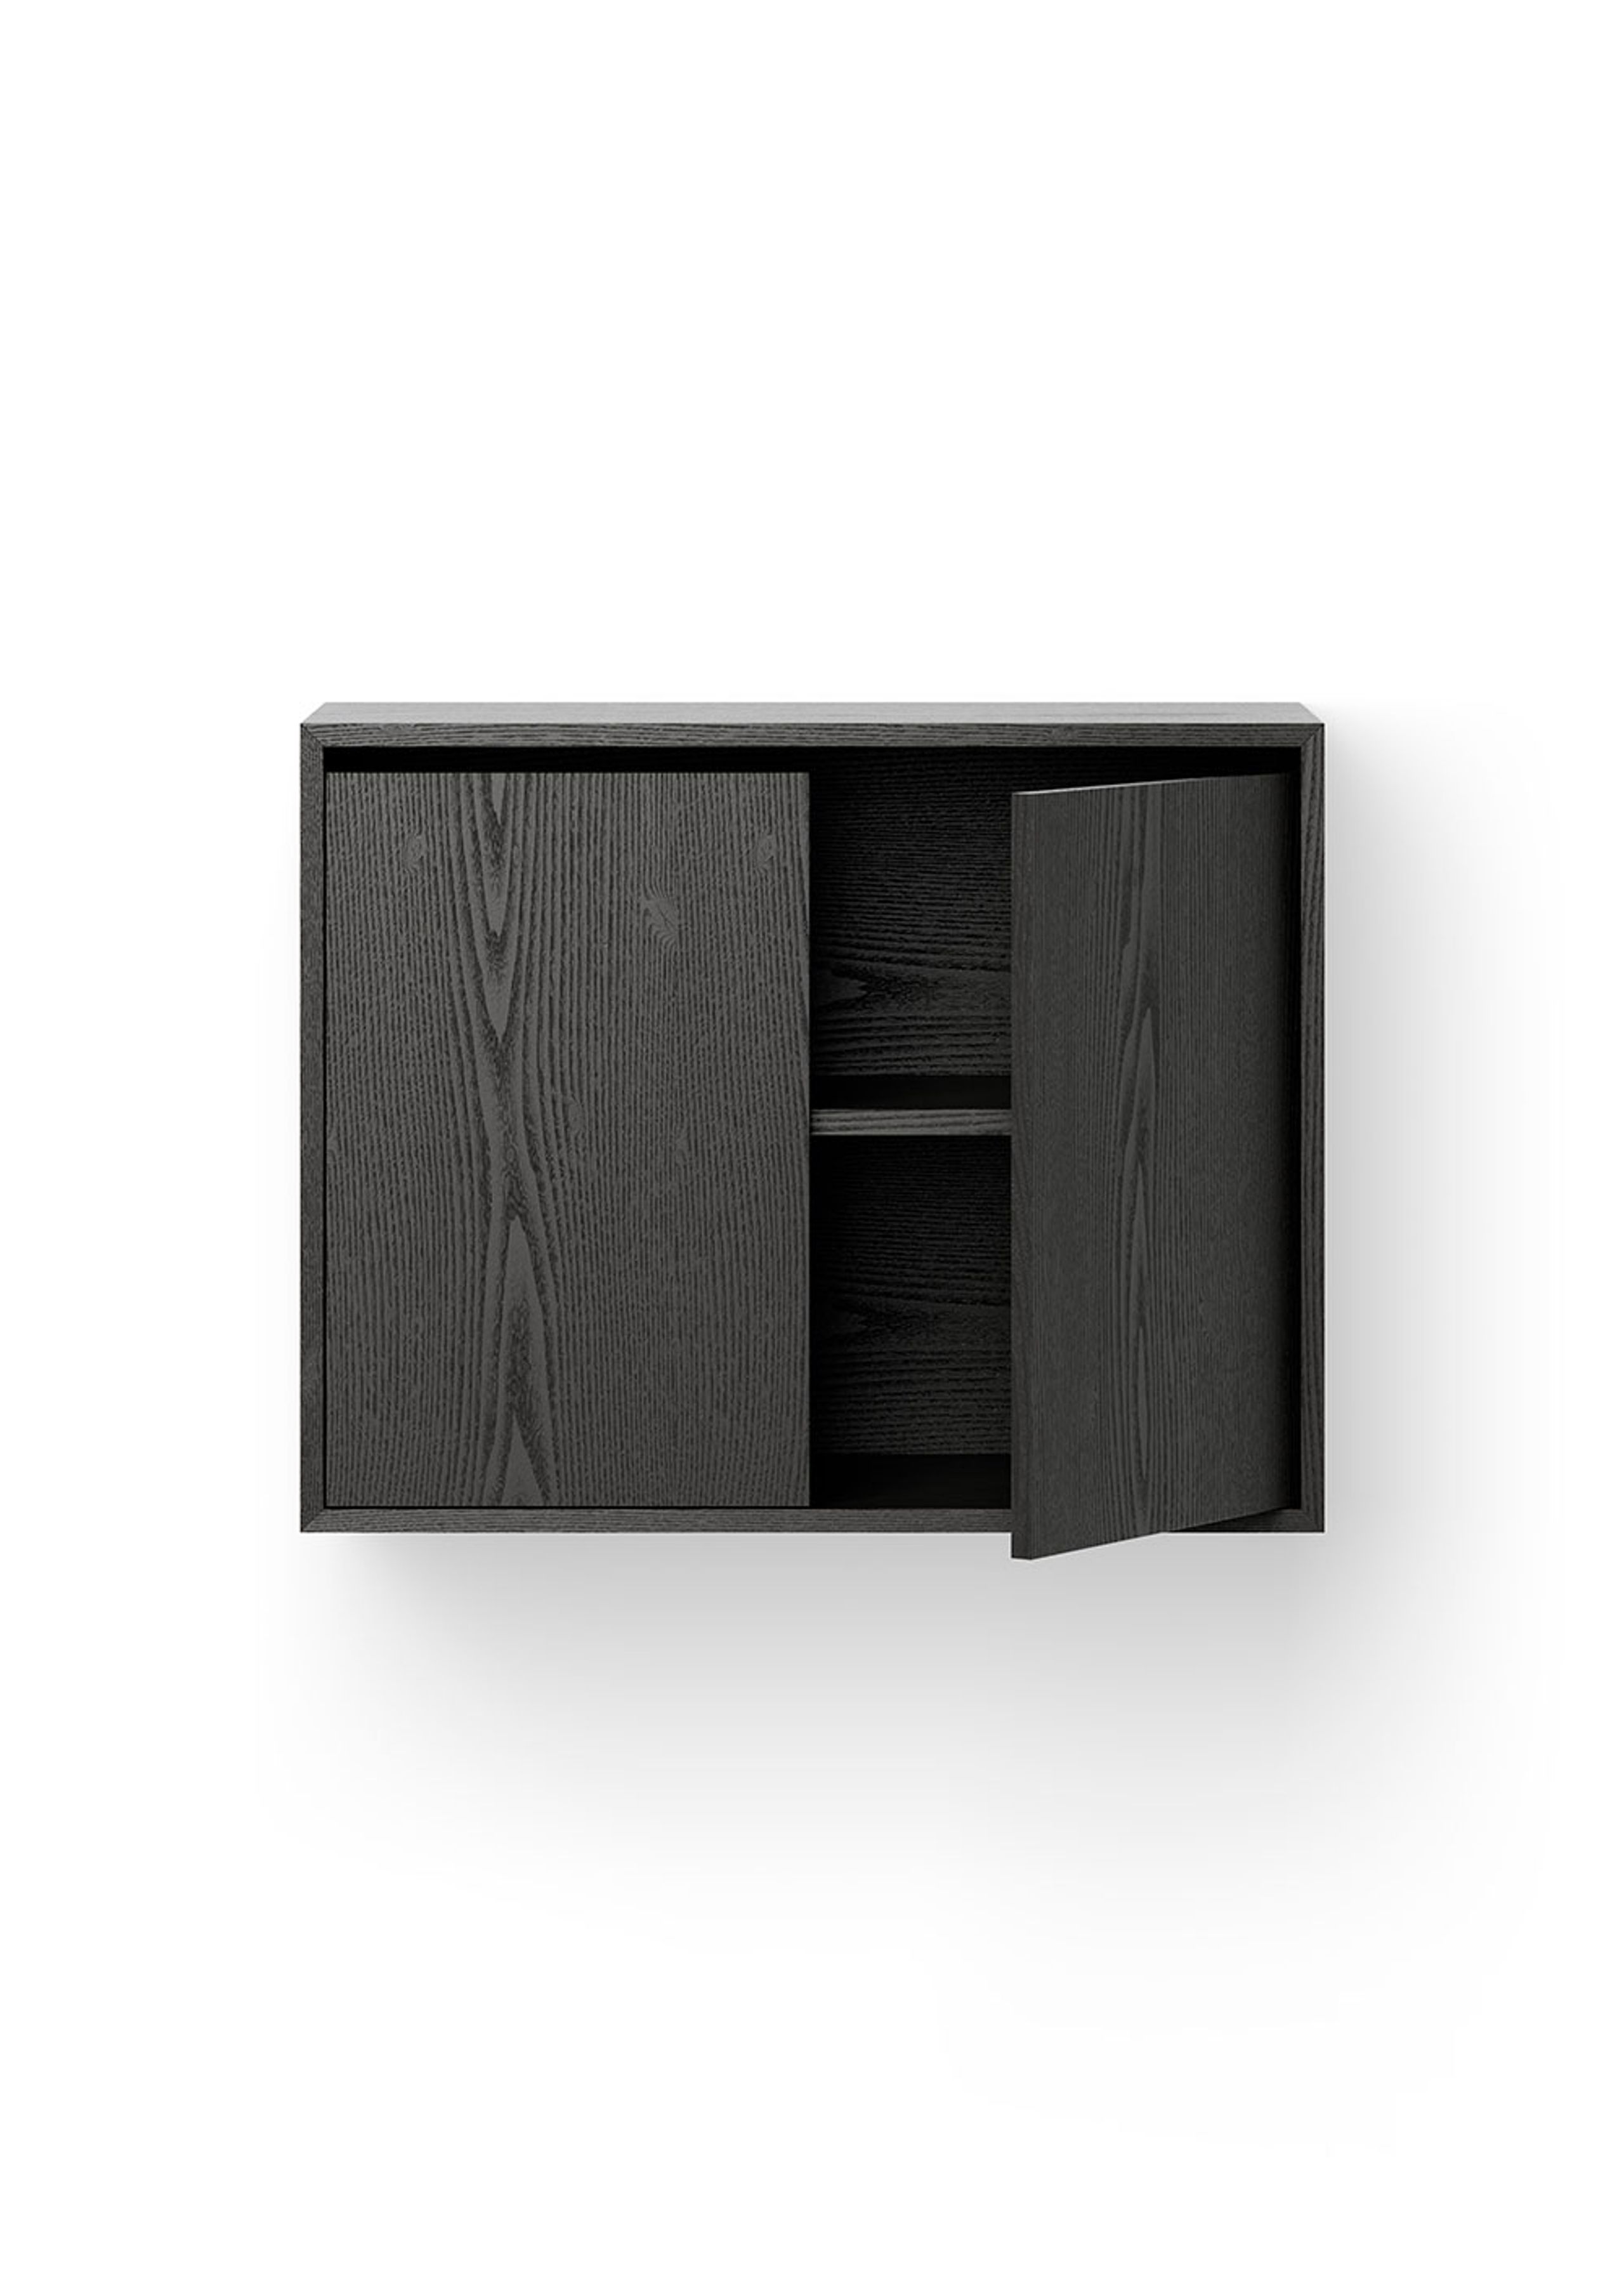 New Works - Criar - New Works Cabinet Tall w. Doors - Black Ash